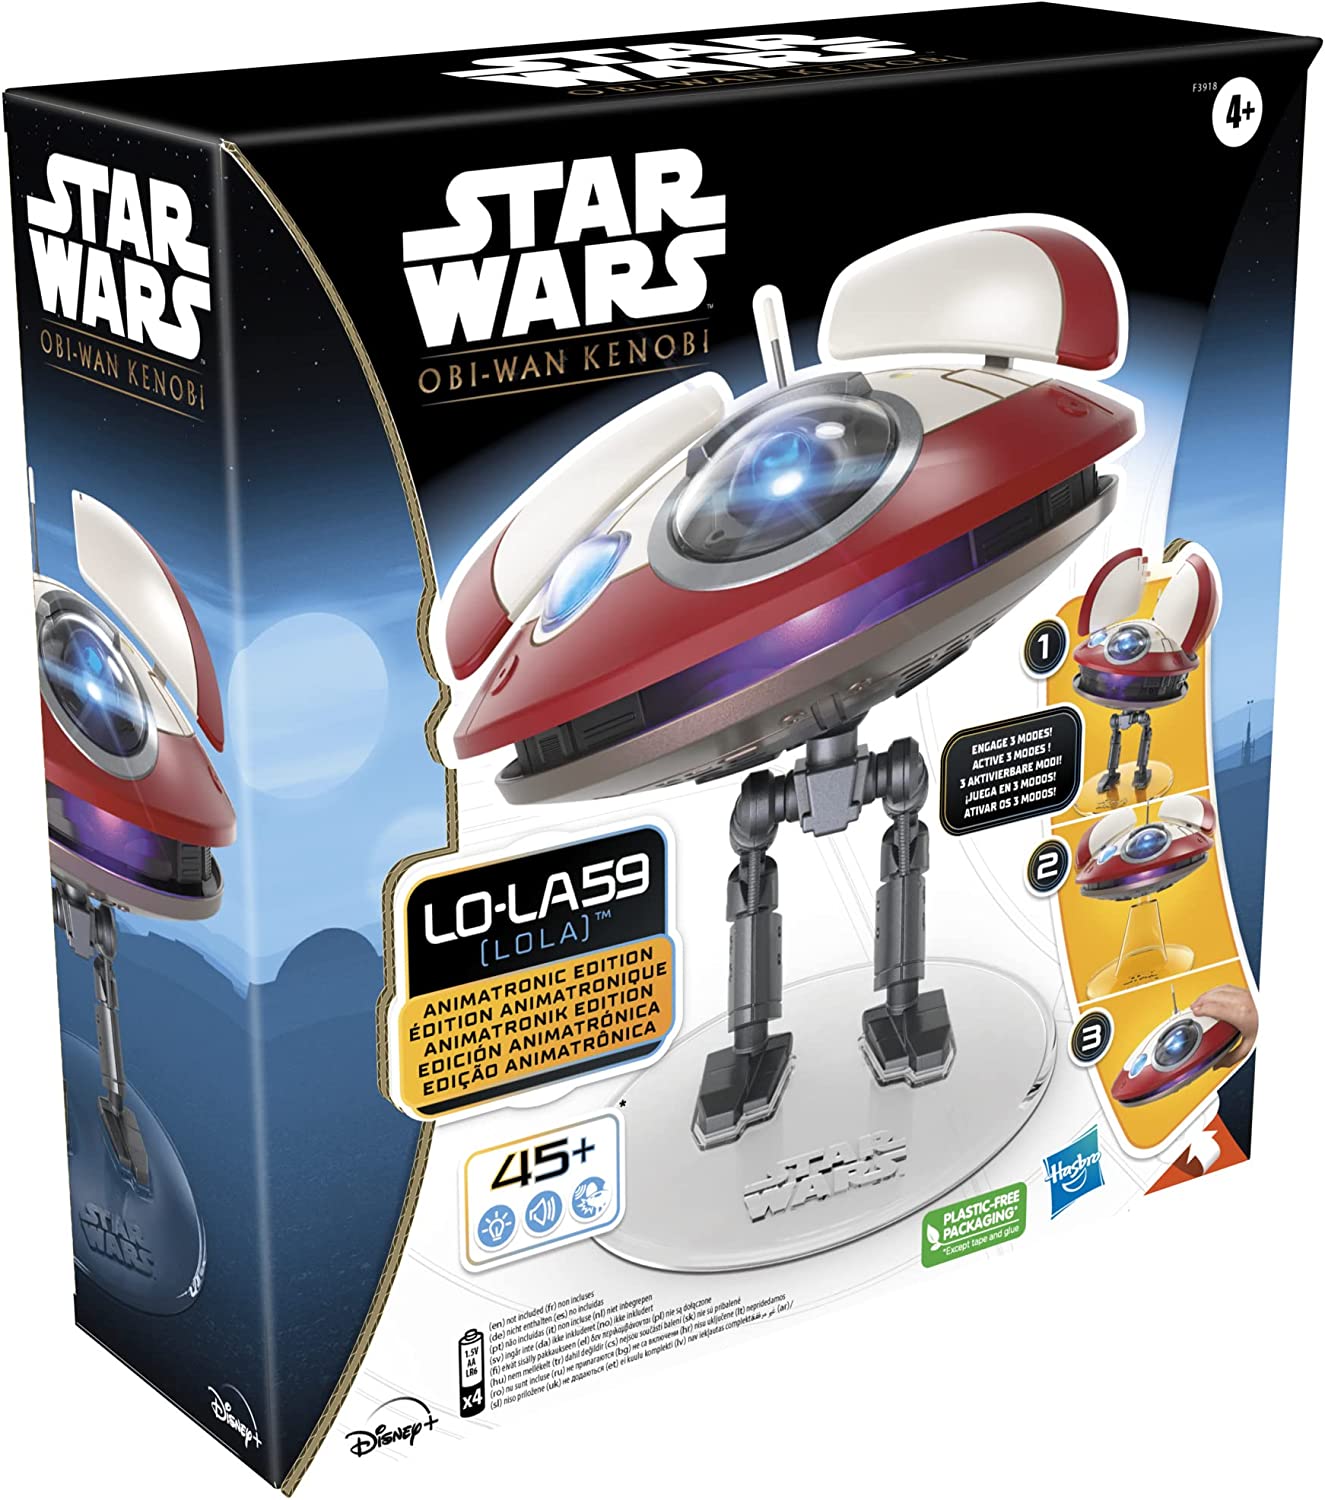 Star Wars LO-LA59 Animatronic Droid